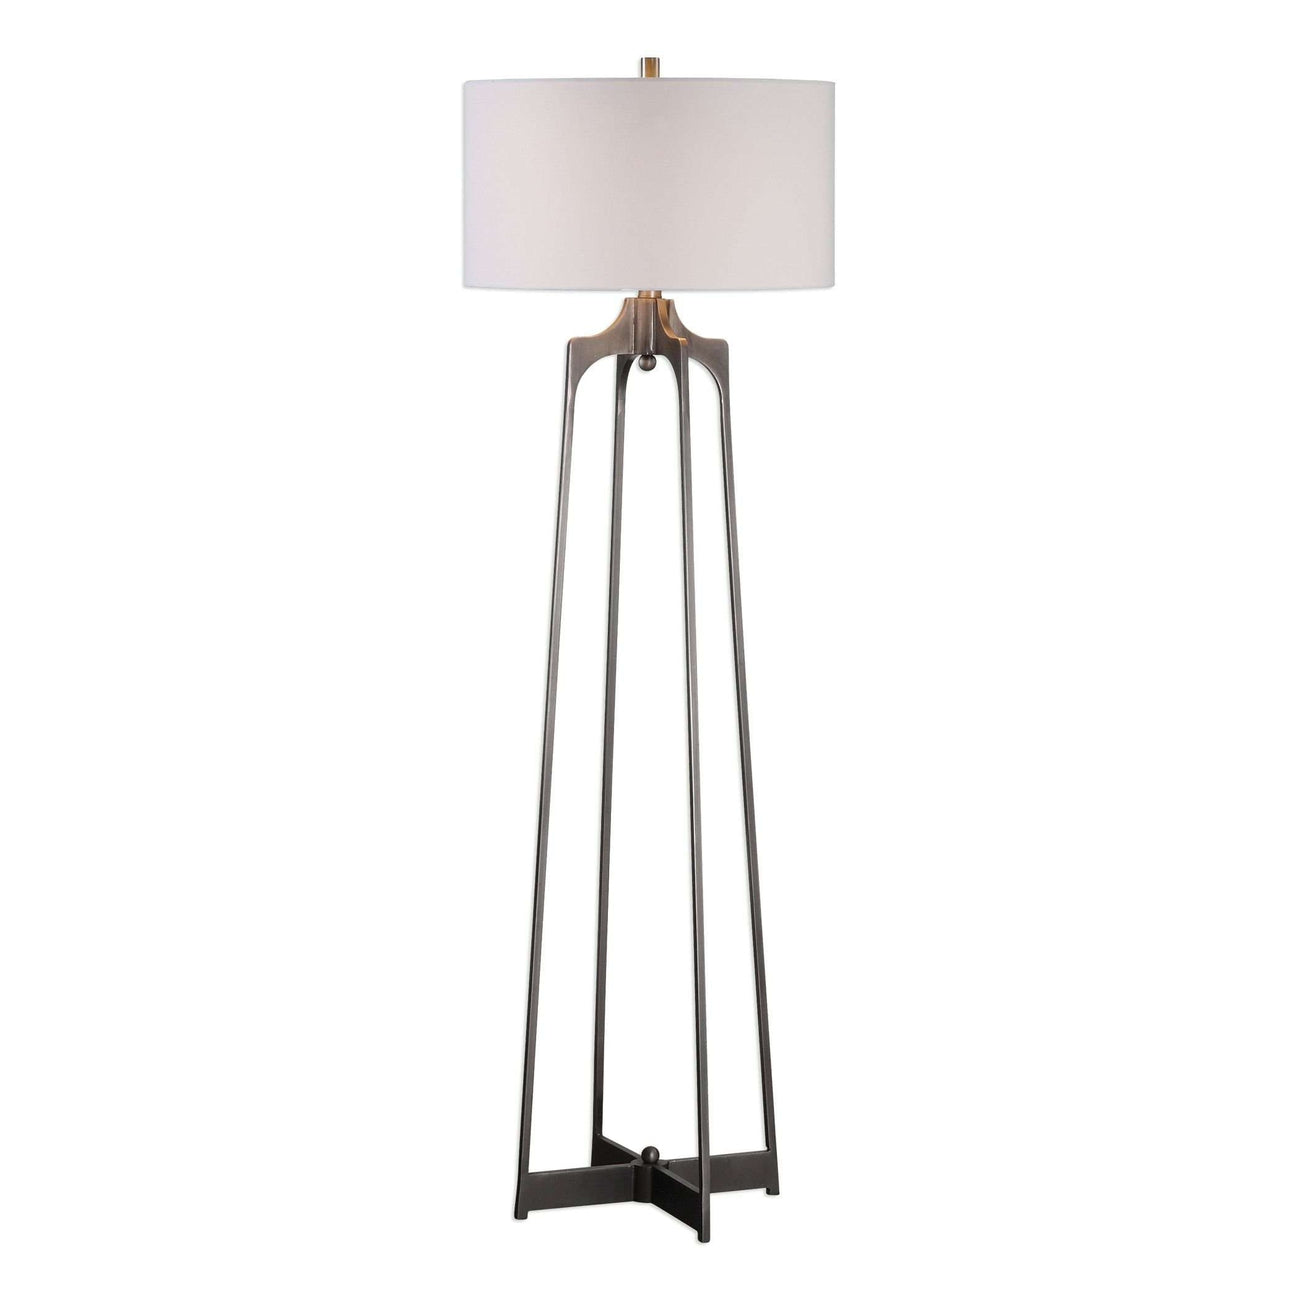 Uttermost, Adrian Modern Floor Lamp